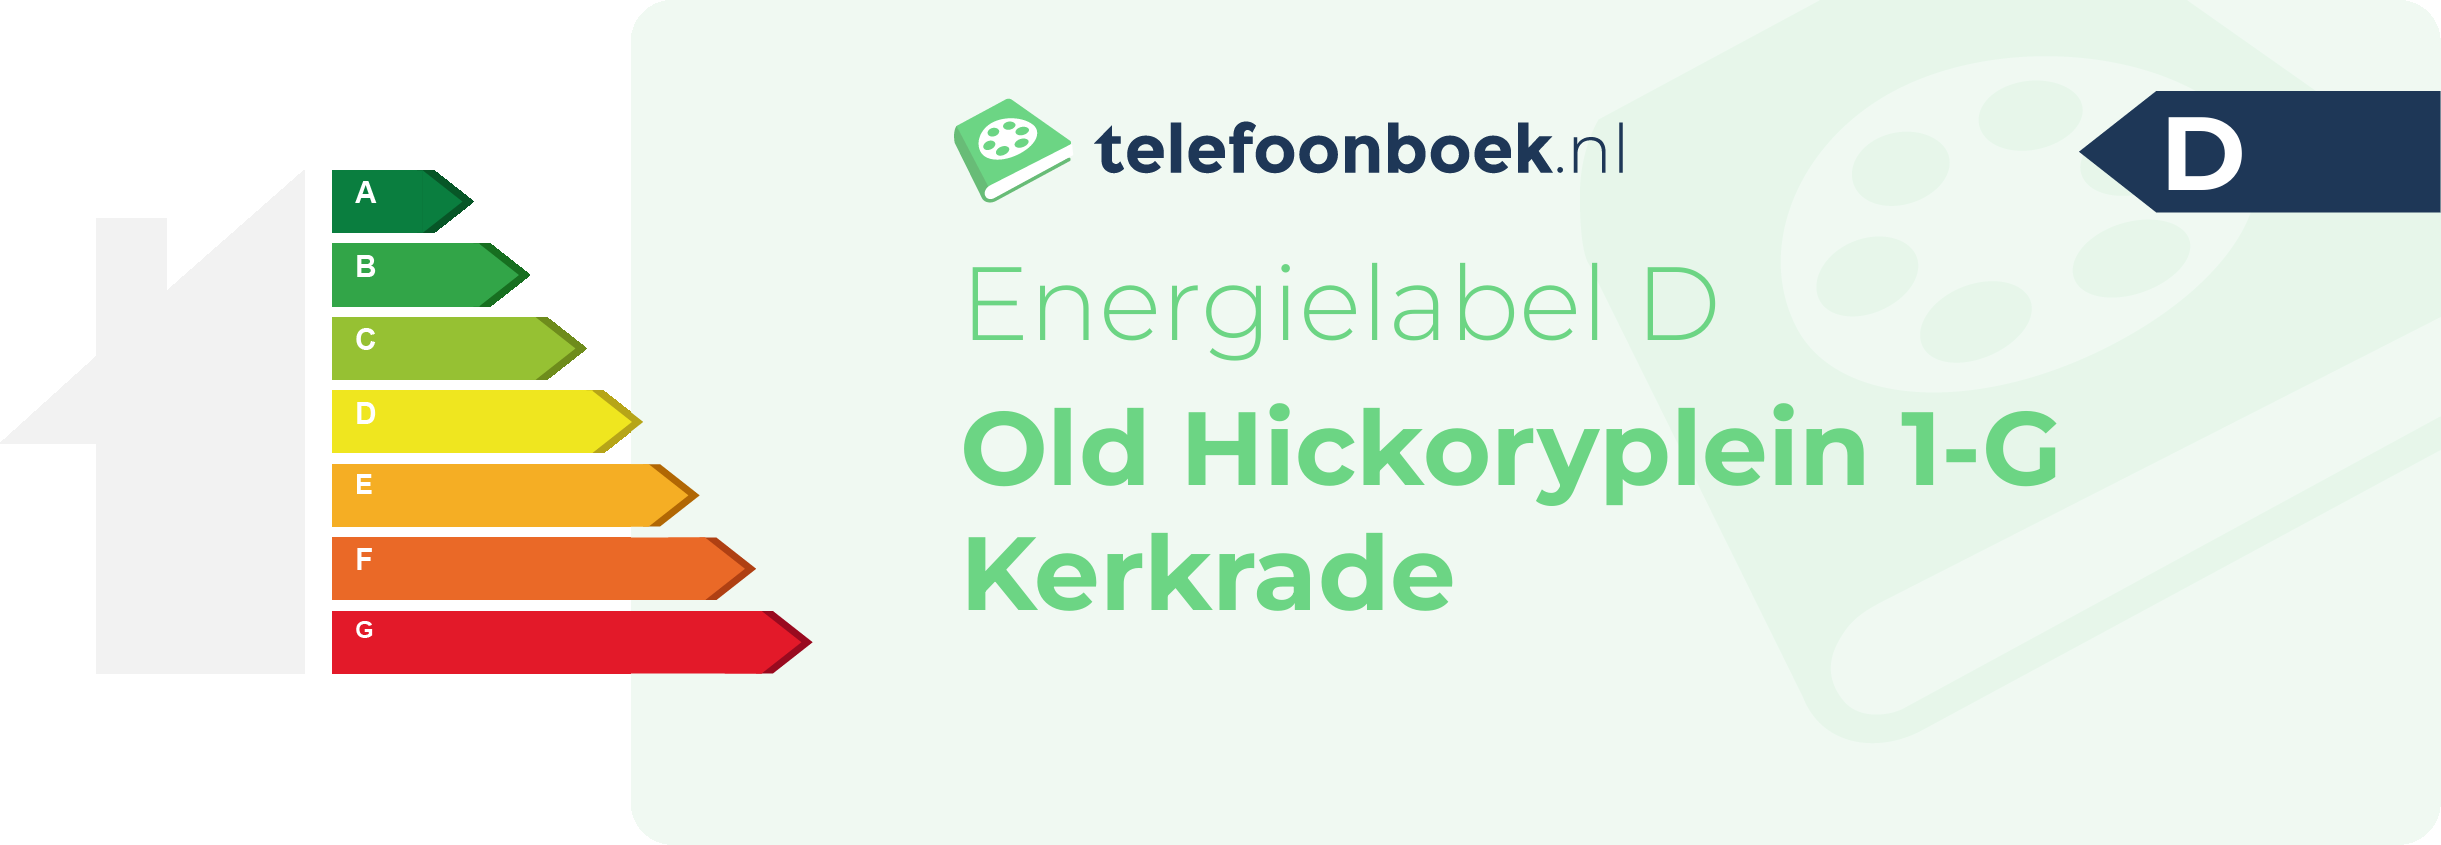 Energielabel Old Hickoryplein 1-G Kerkrade